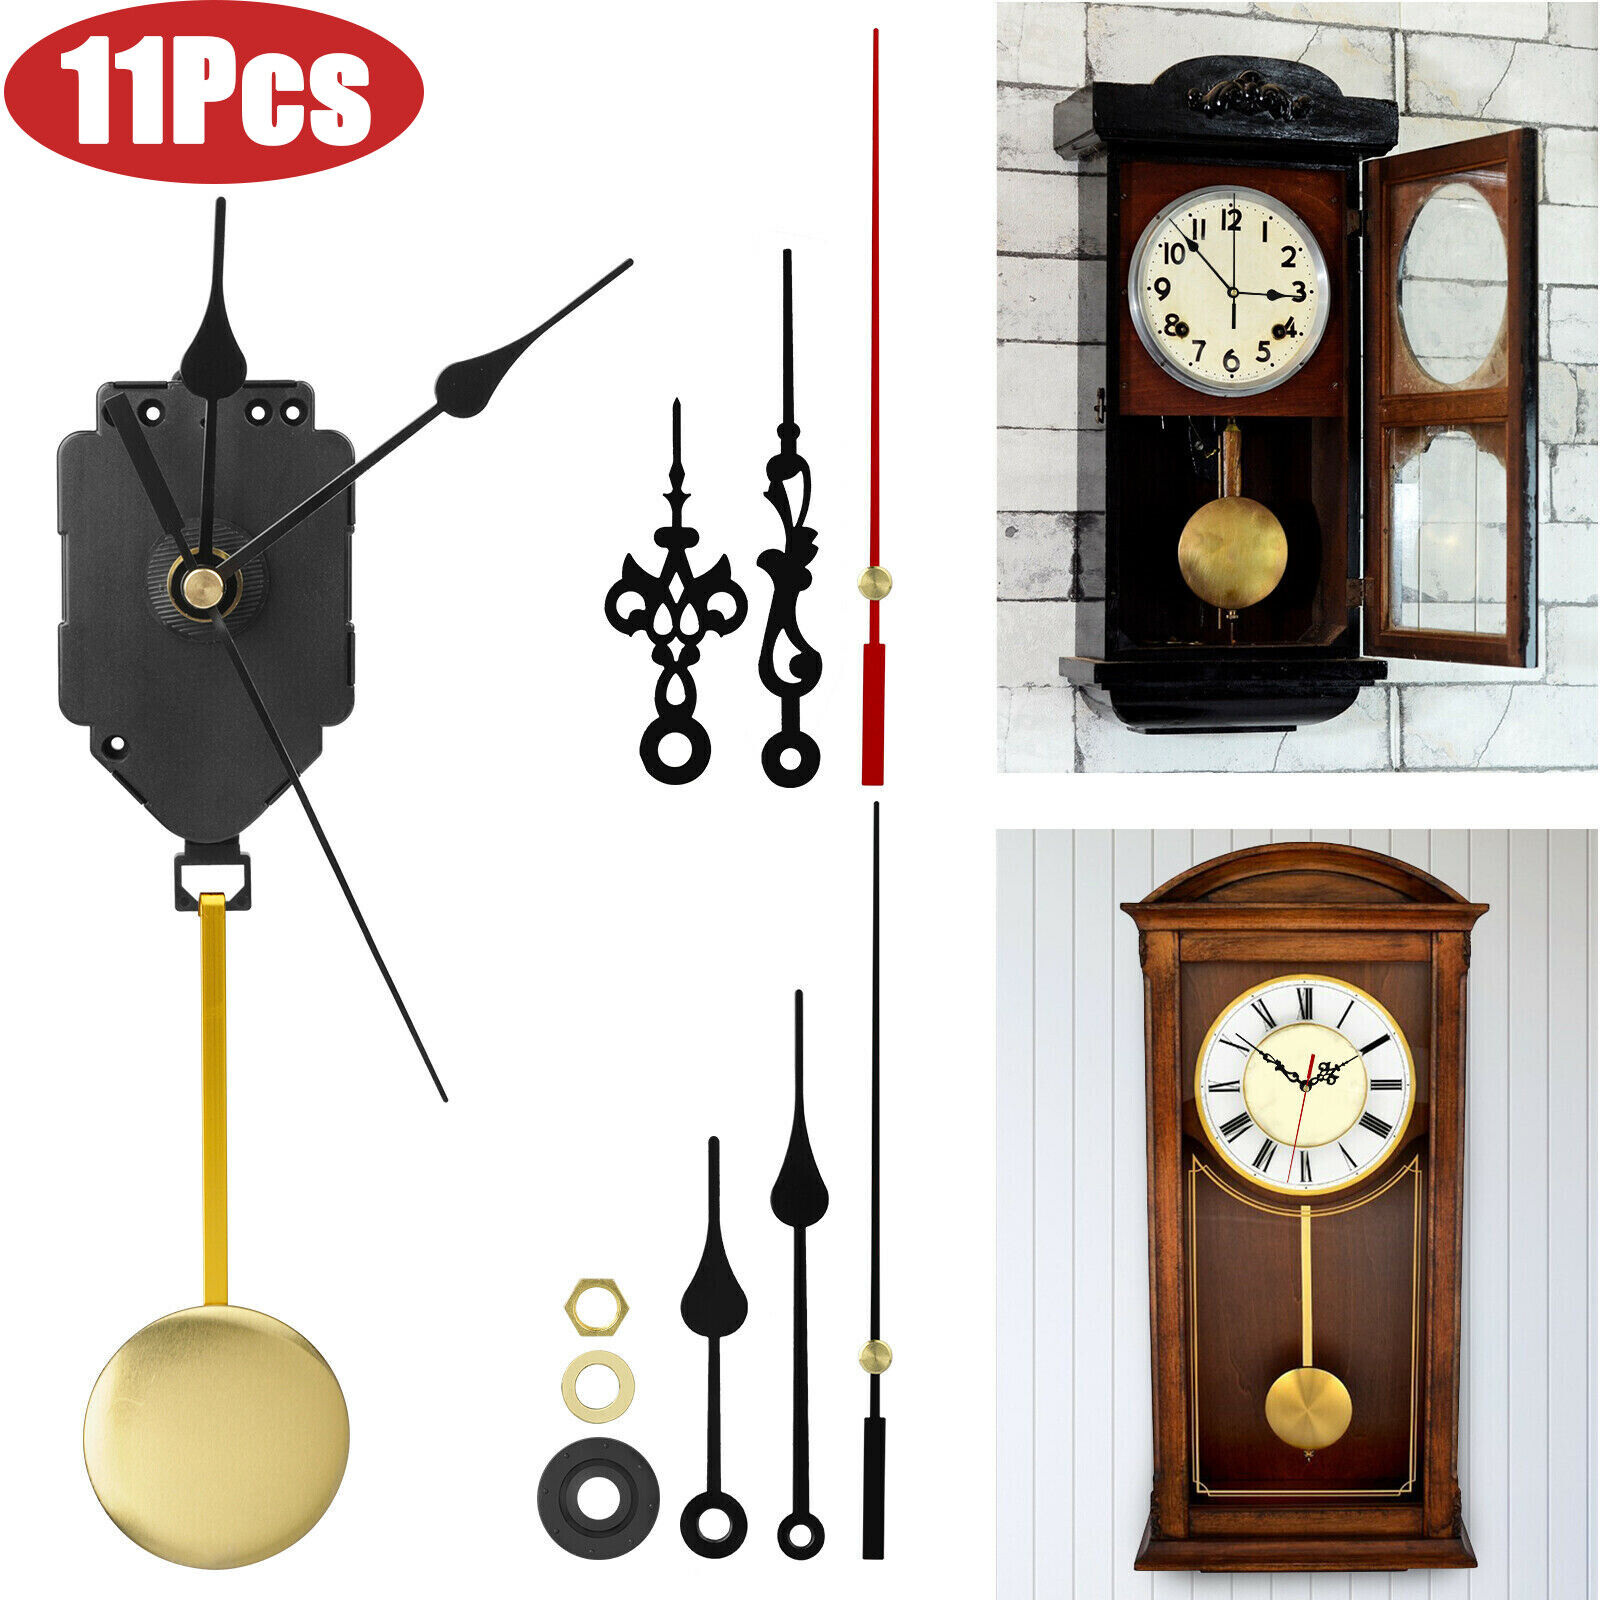 Quartz Wall Clock Pendulum Swing Movement Mechanism DIY Kit Silent Repair Parts